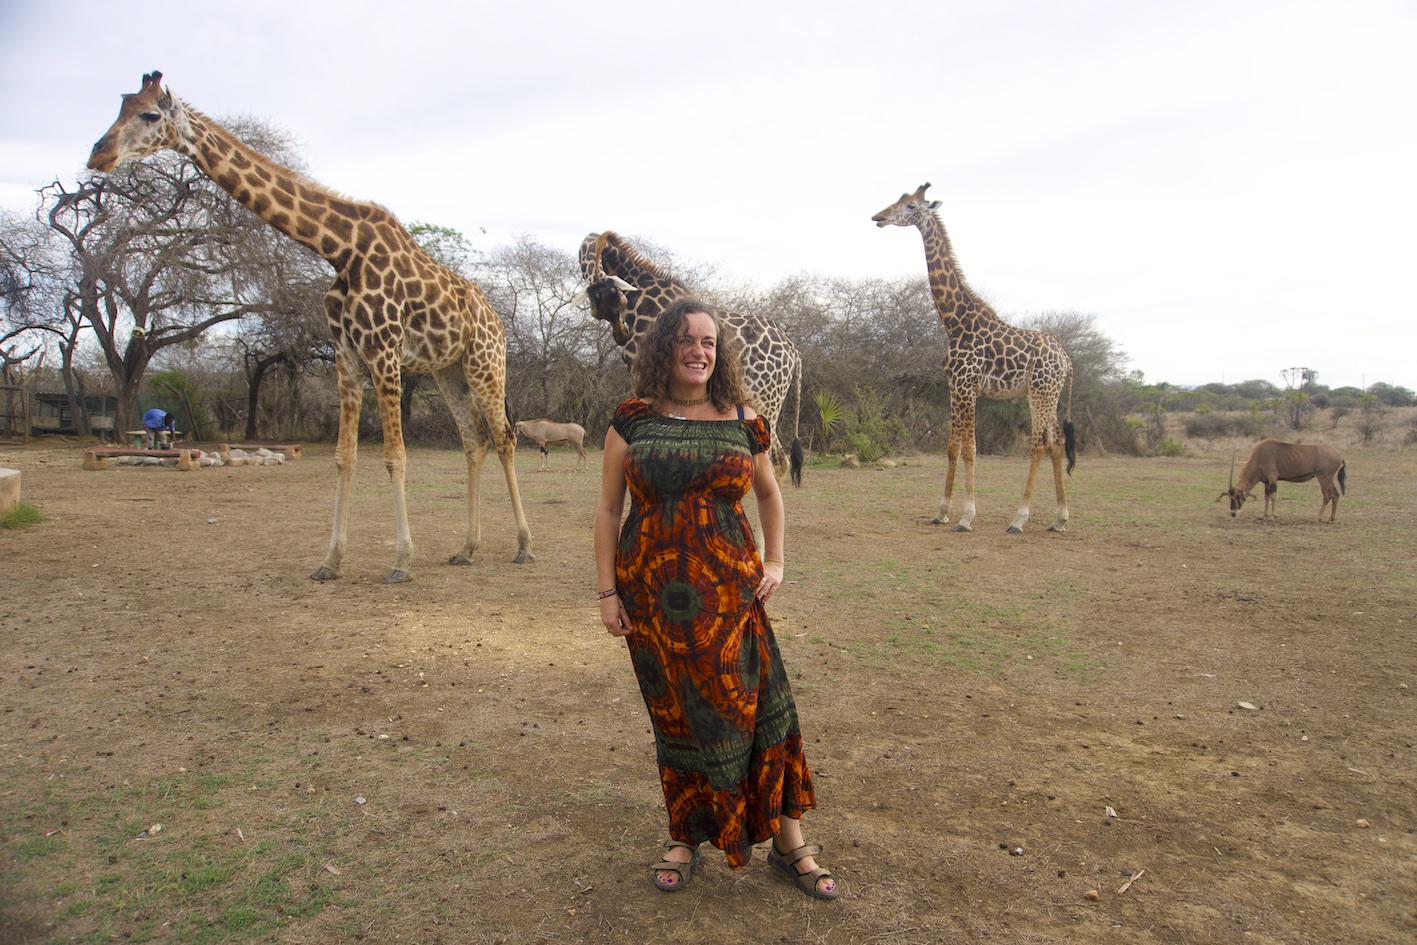 Pilar with three giraffes at the Nguuni, Mombasa